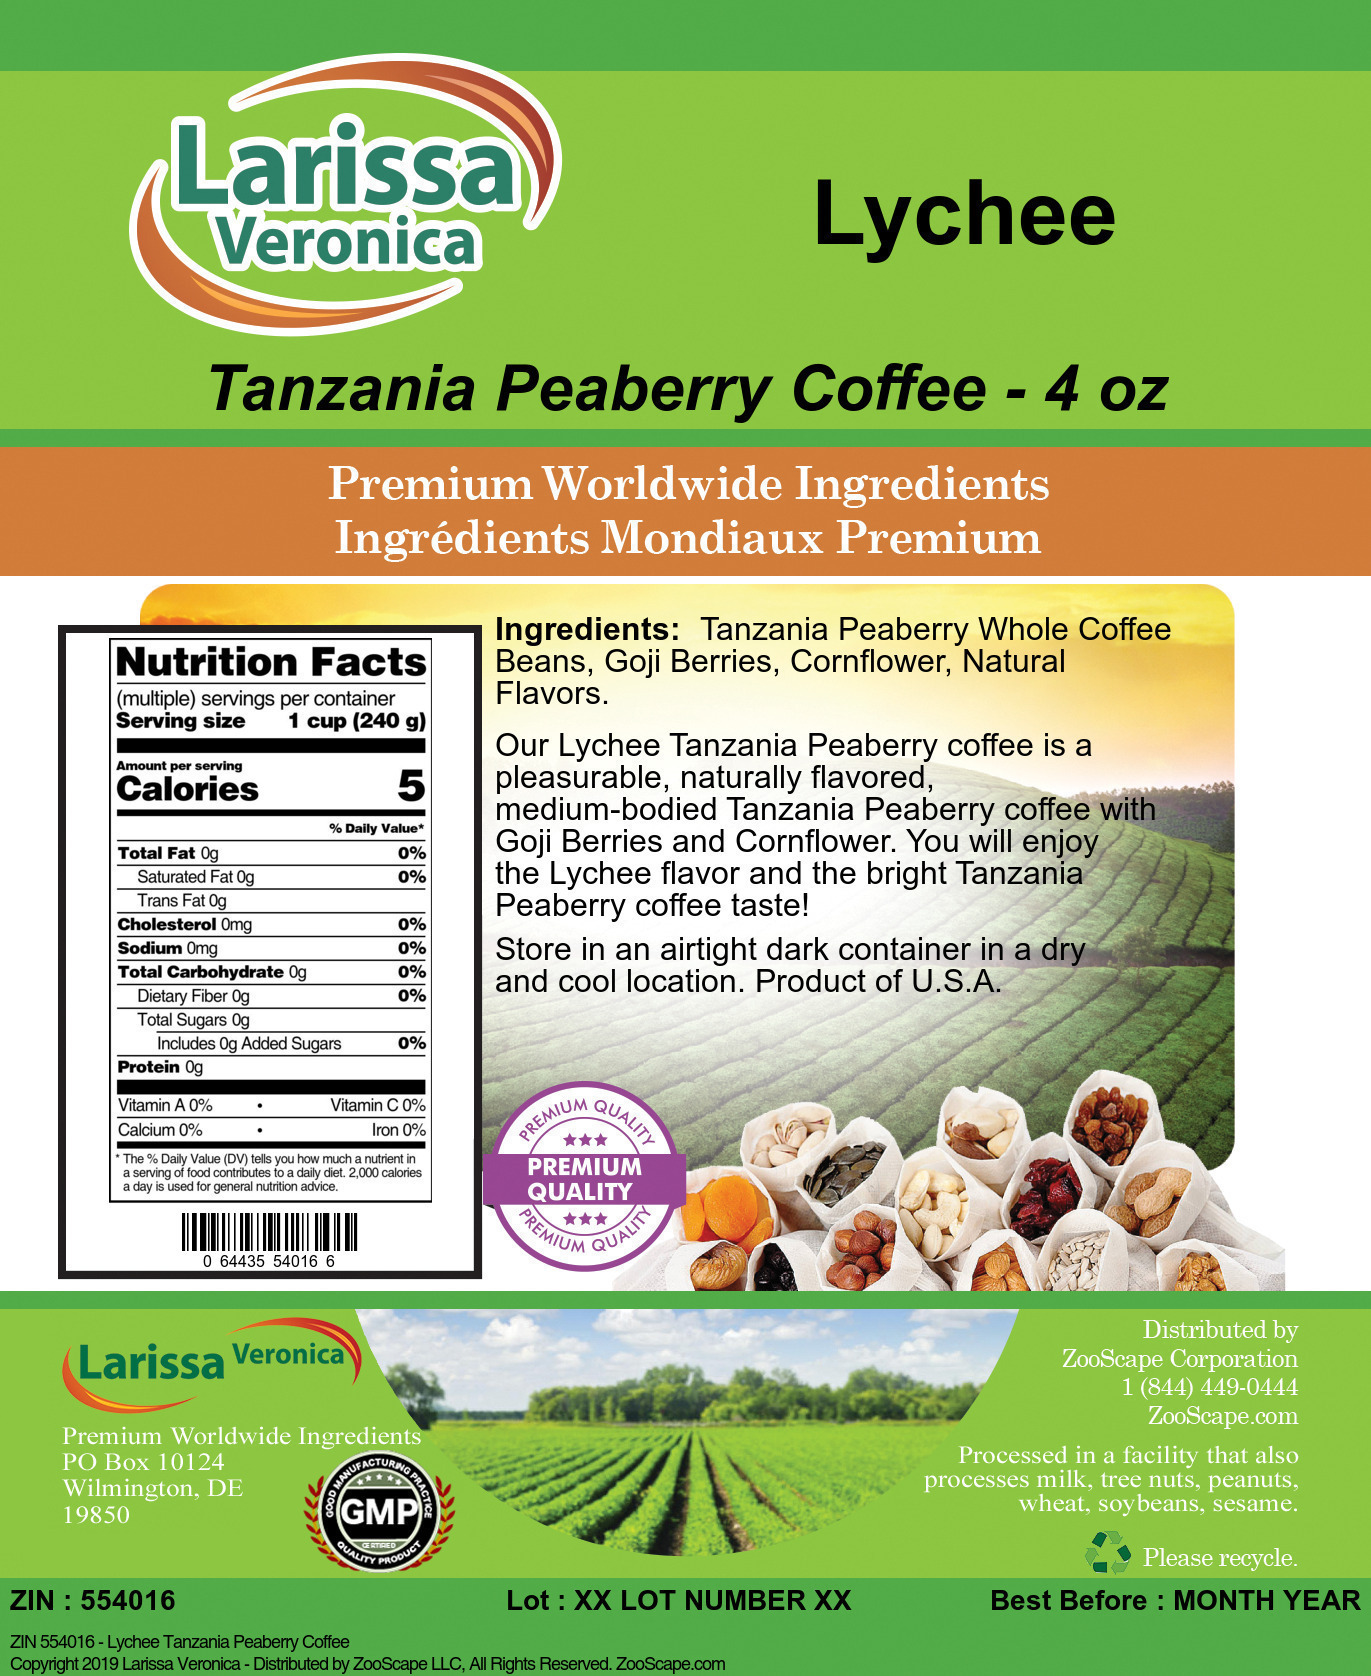 Lychee Tanzania Peaberry Coffee - Label